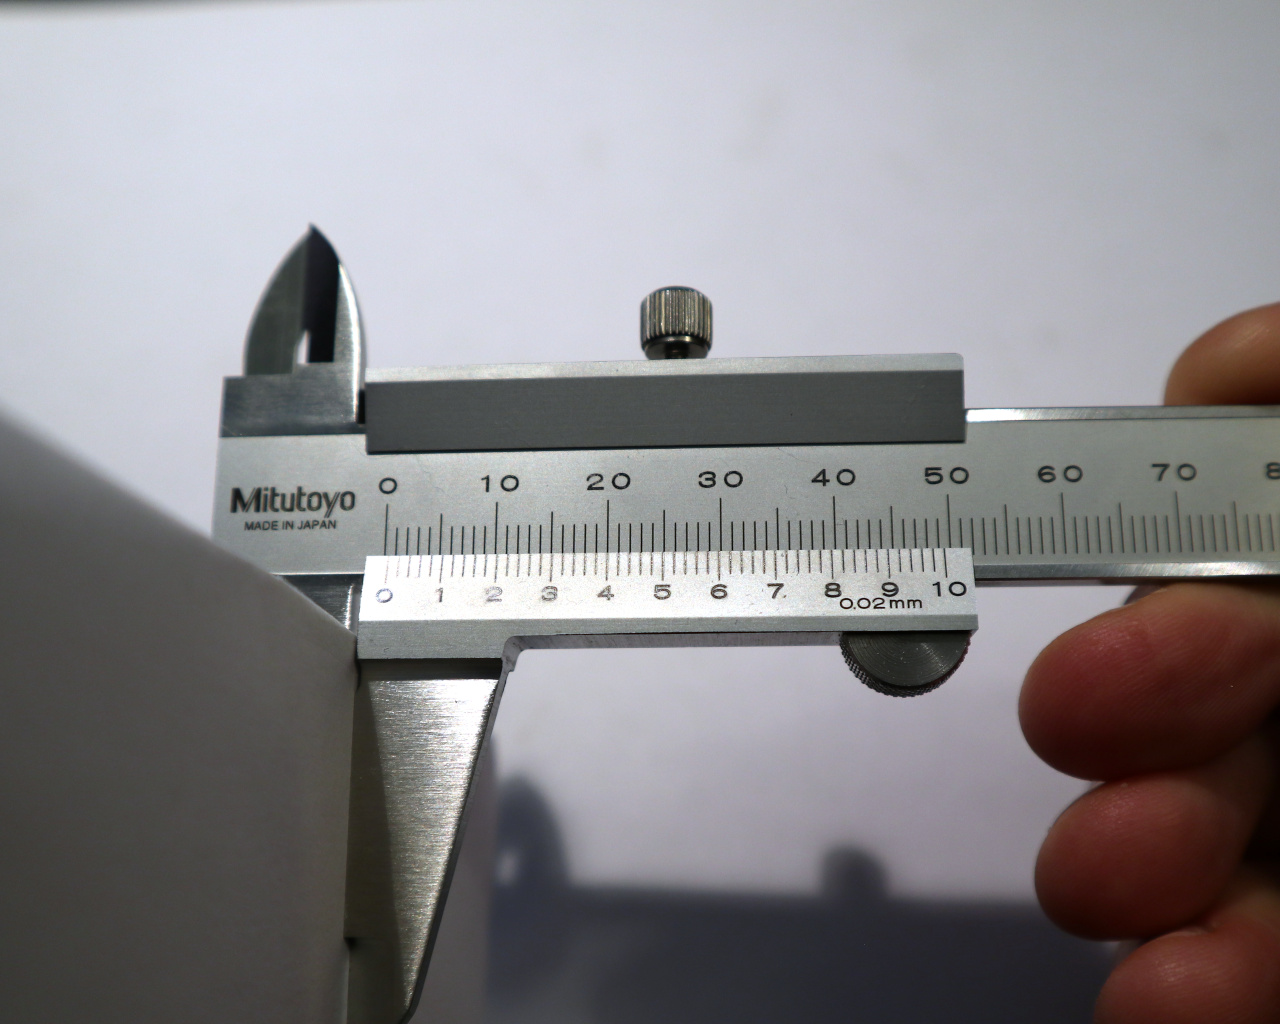 Fliyeong Vernier Caliper Mini Single Scale Vernier Caliper Portable Copper Ruler Callipers Measurement Tool for Measuring Gemstones and Jewelry 1 Pcs